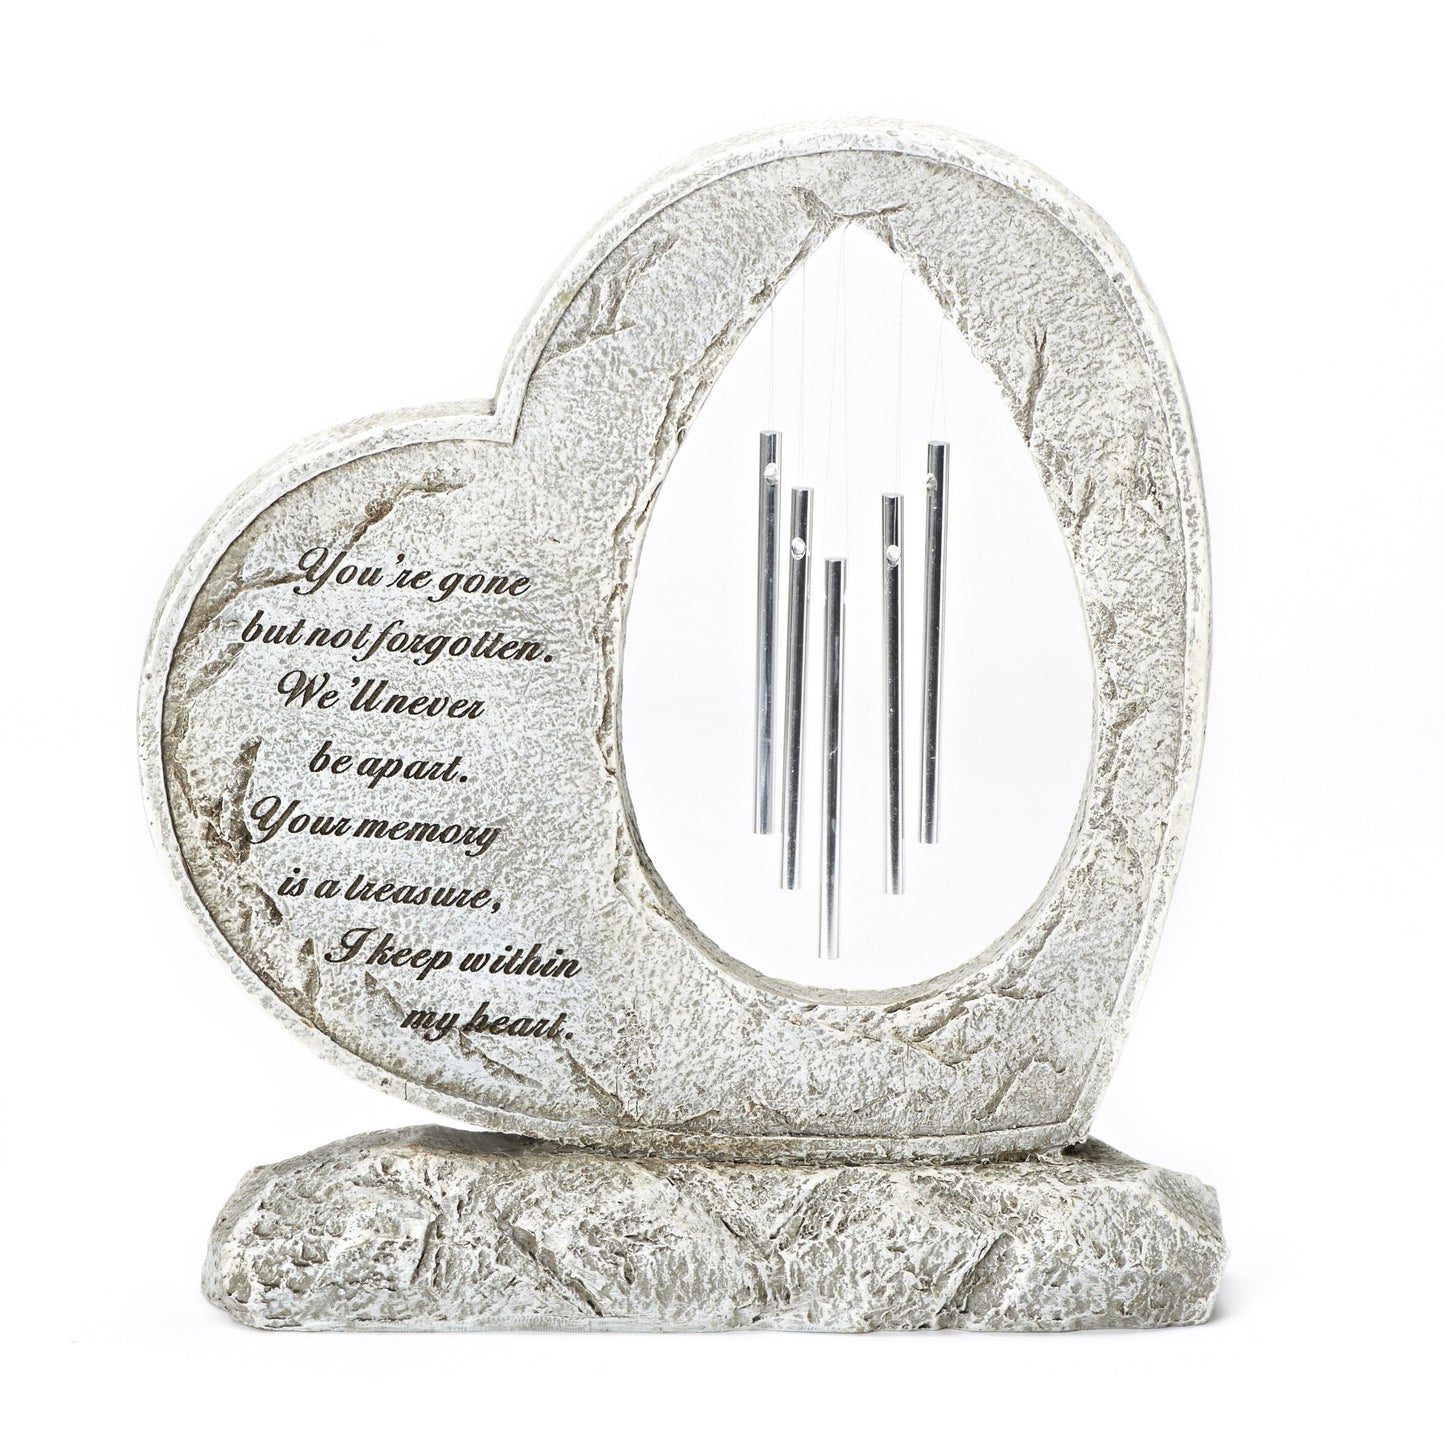 Roman Your Memory Treasure Within Heart 12 Inch Resin Stone Garden Chime Figurine